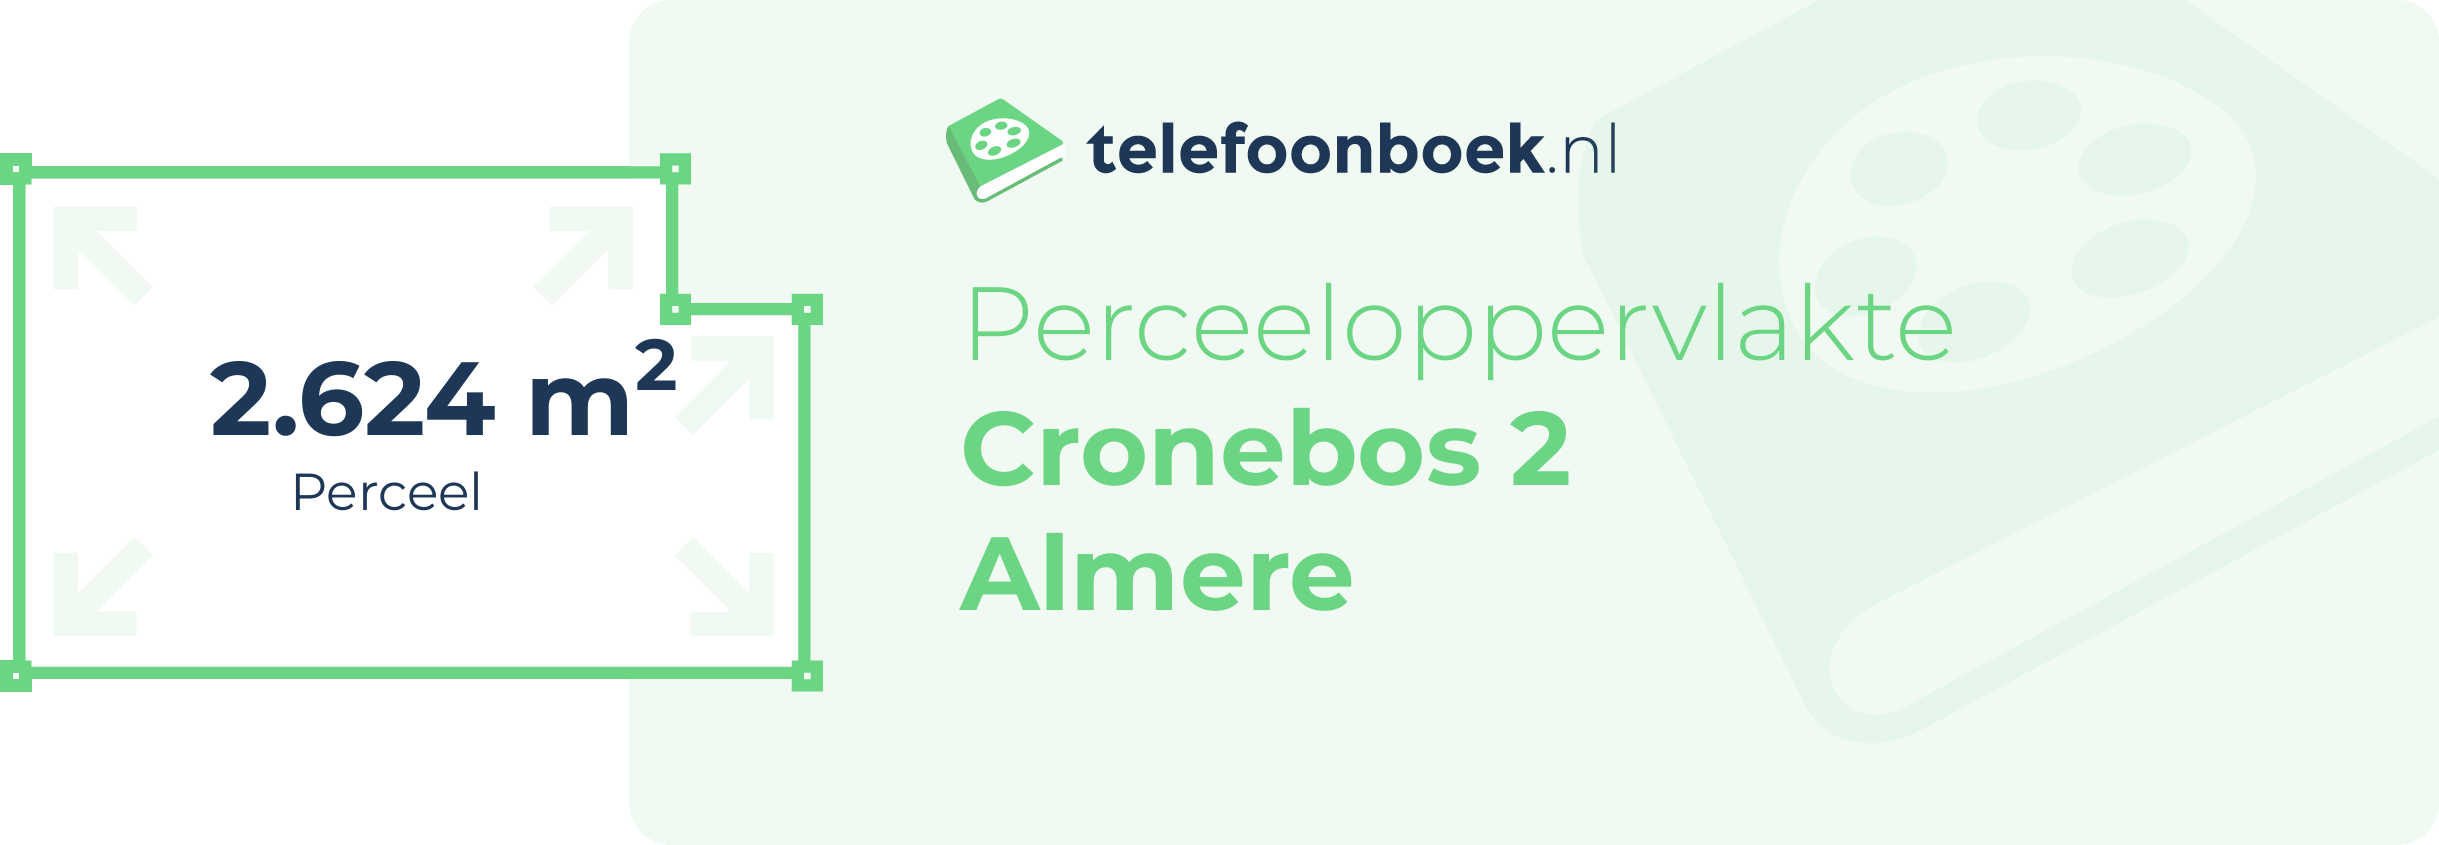 Perceeloppervlakte Cronebos 2 Almere